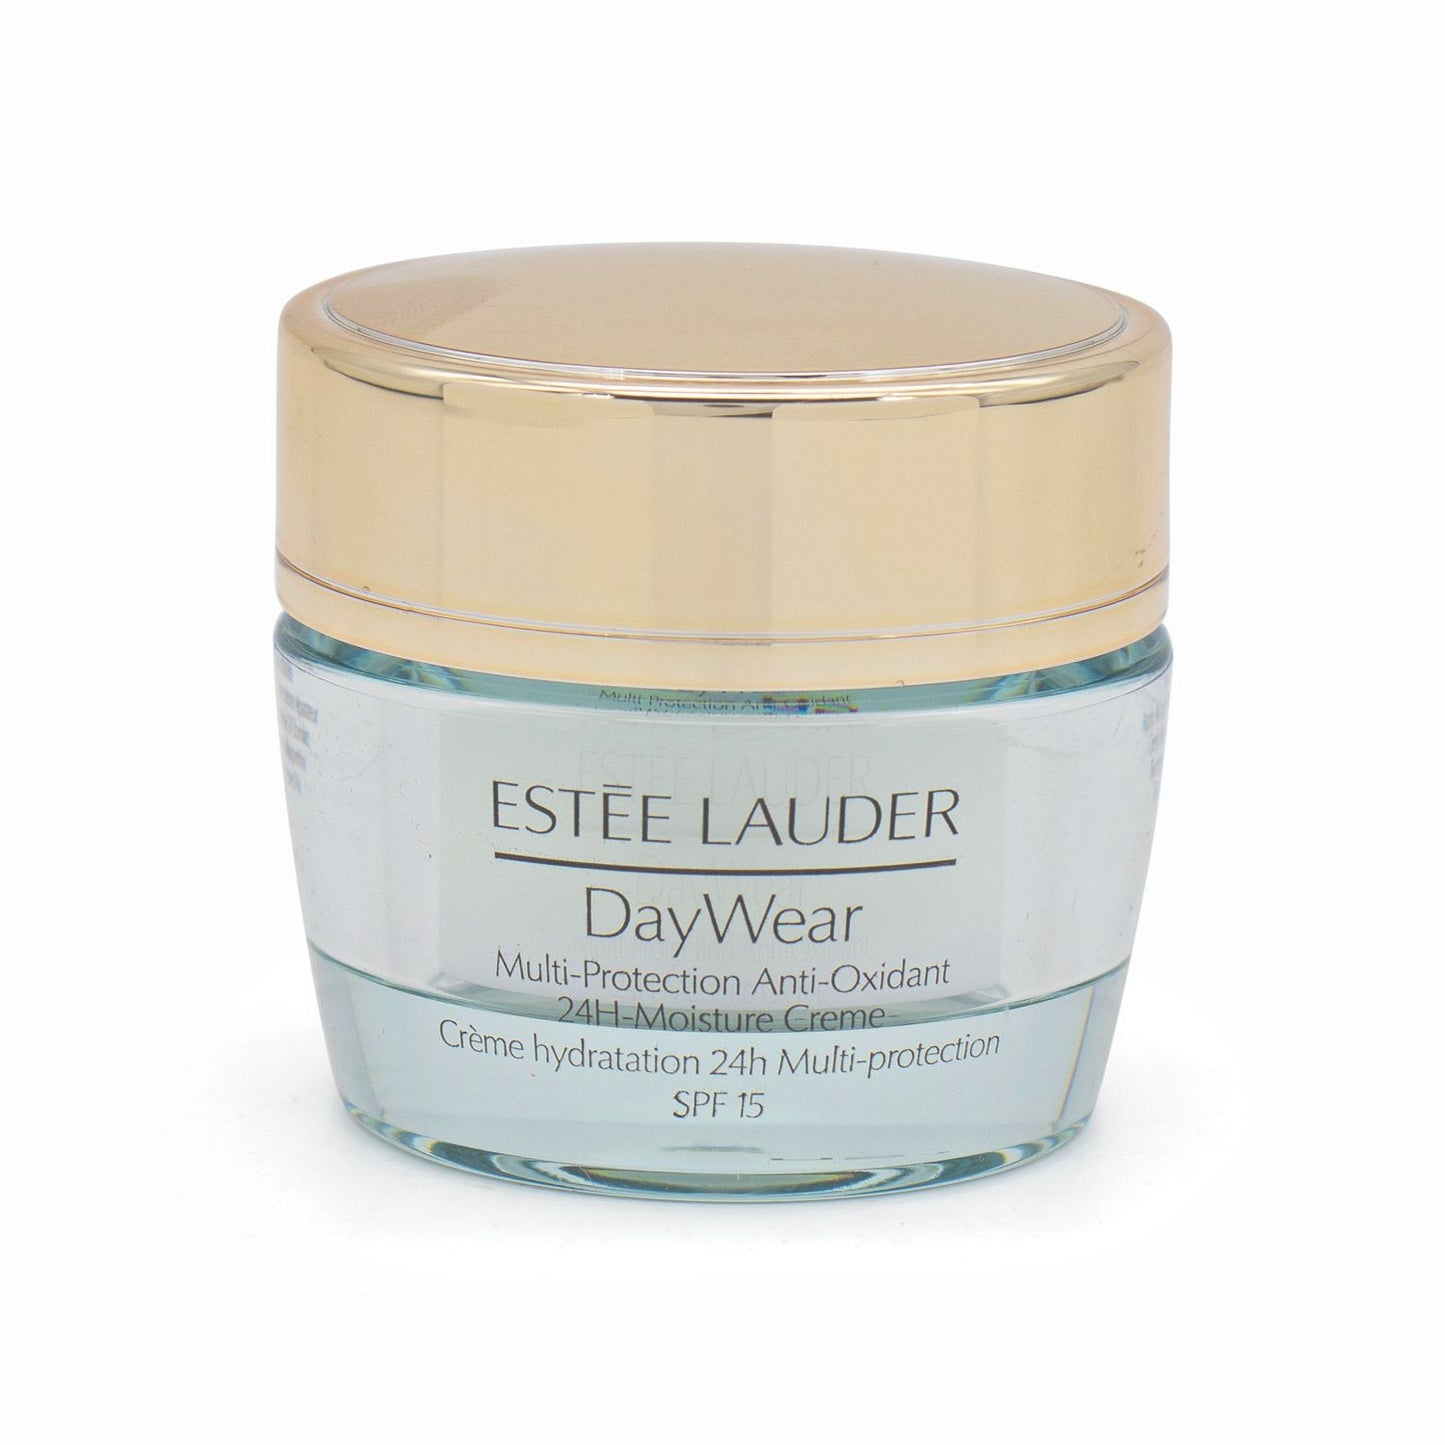 Estee Lauder DayWear Multi-Protection Anti-Oxidant Creme 15ml - Imperfect Box